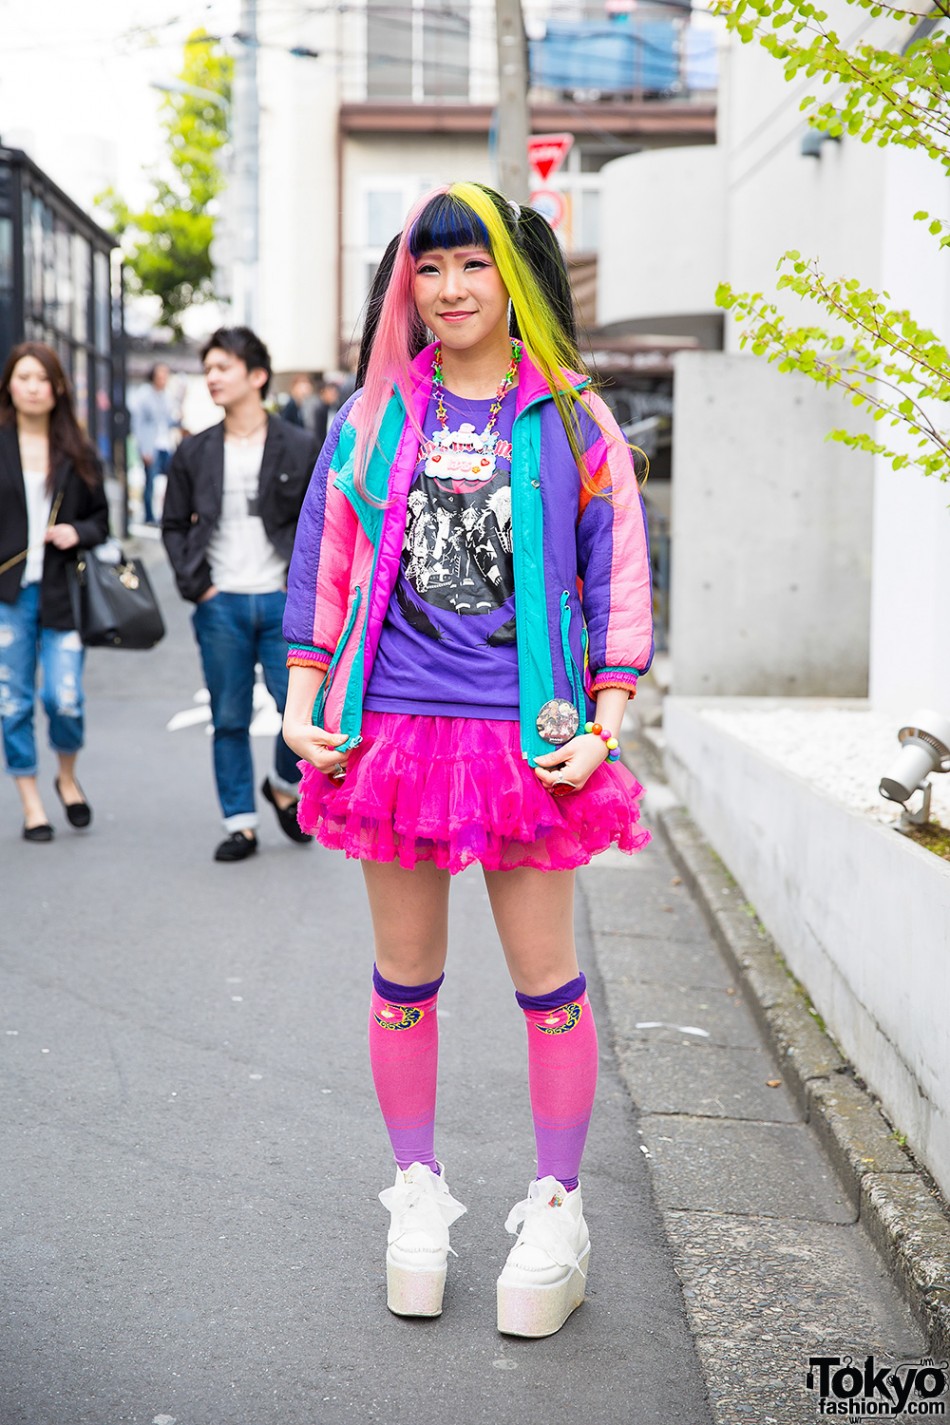 Harajuku Girl with Rainbow Hair & Colorful Outfit – Tokyo Fashion